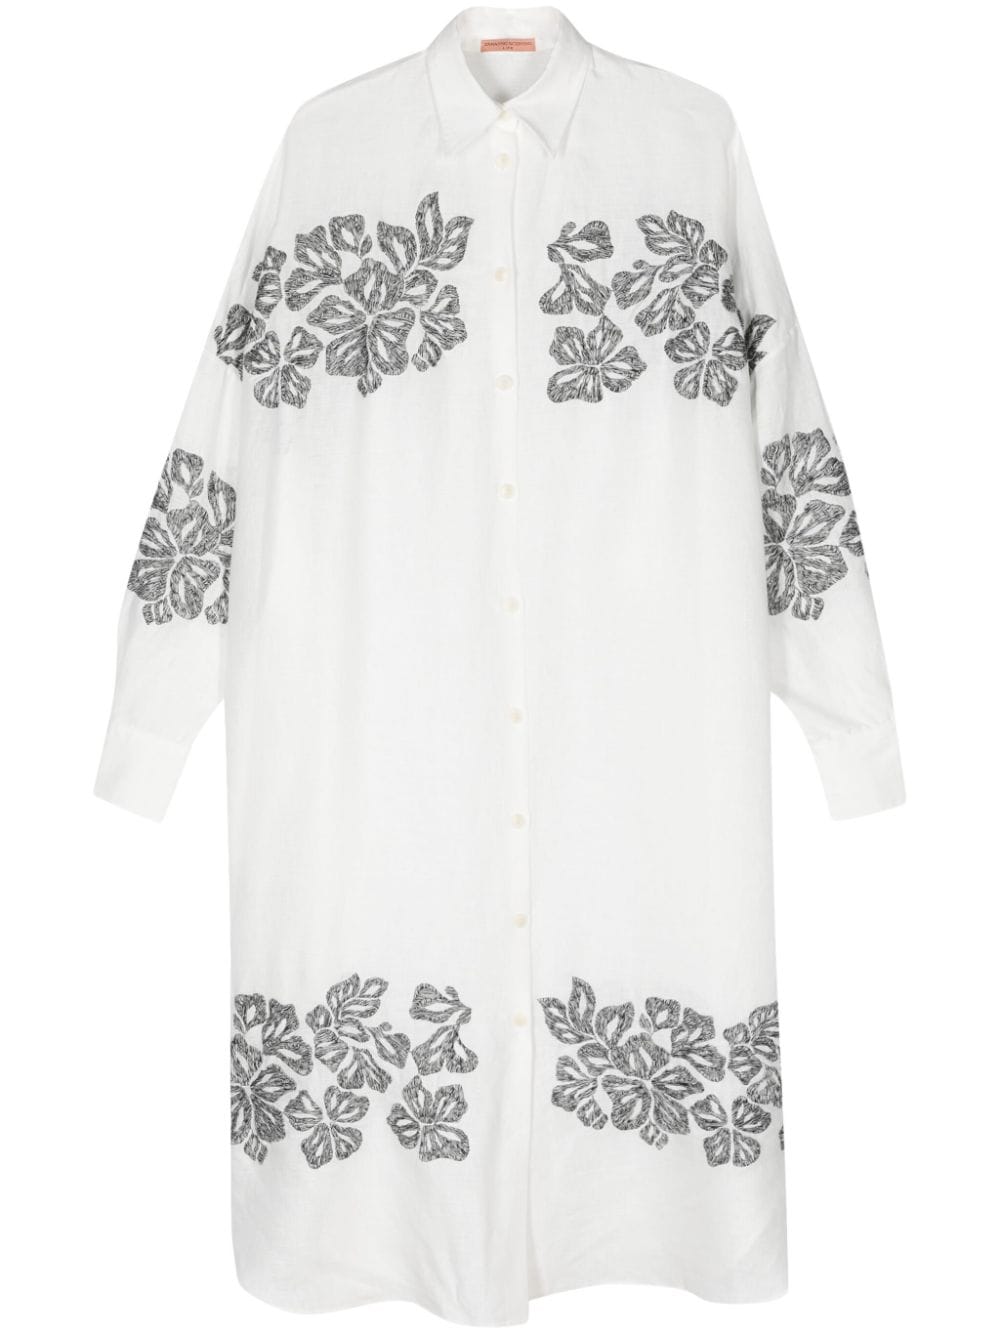 Ermanno Scervino floral-embroidered linen shirt dress - White von Ermanno Scervino